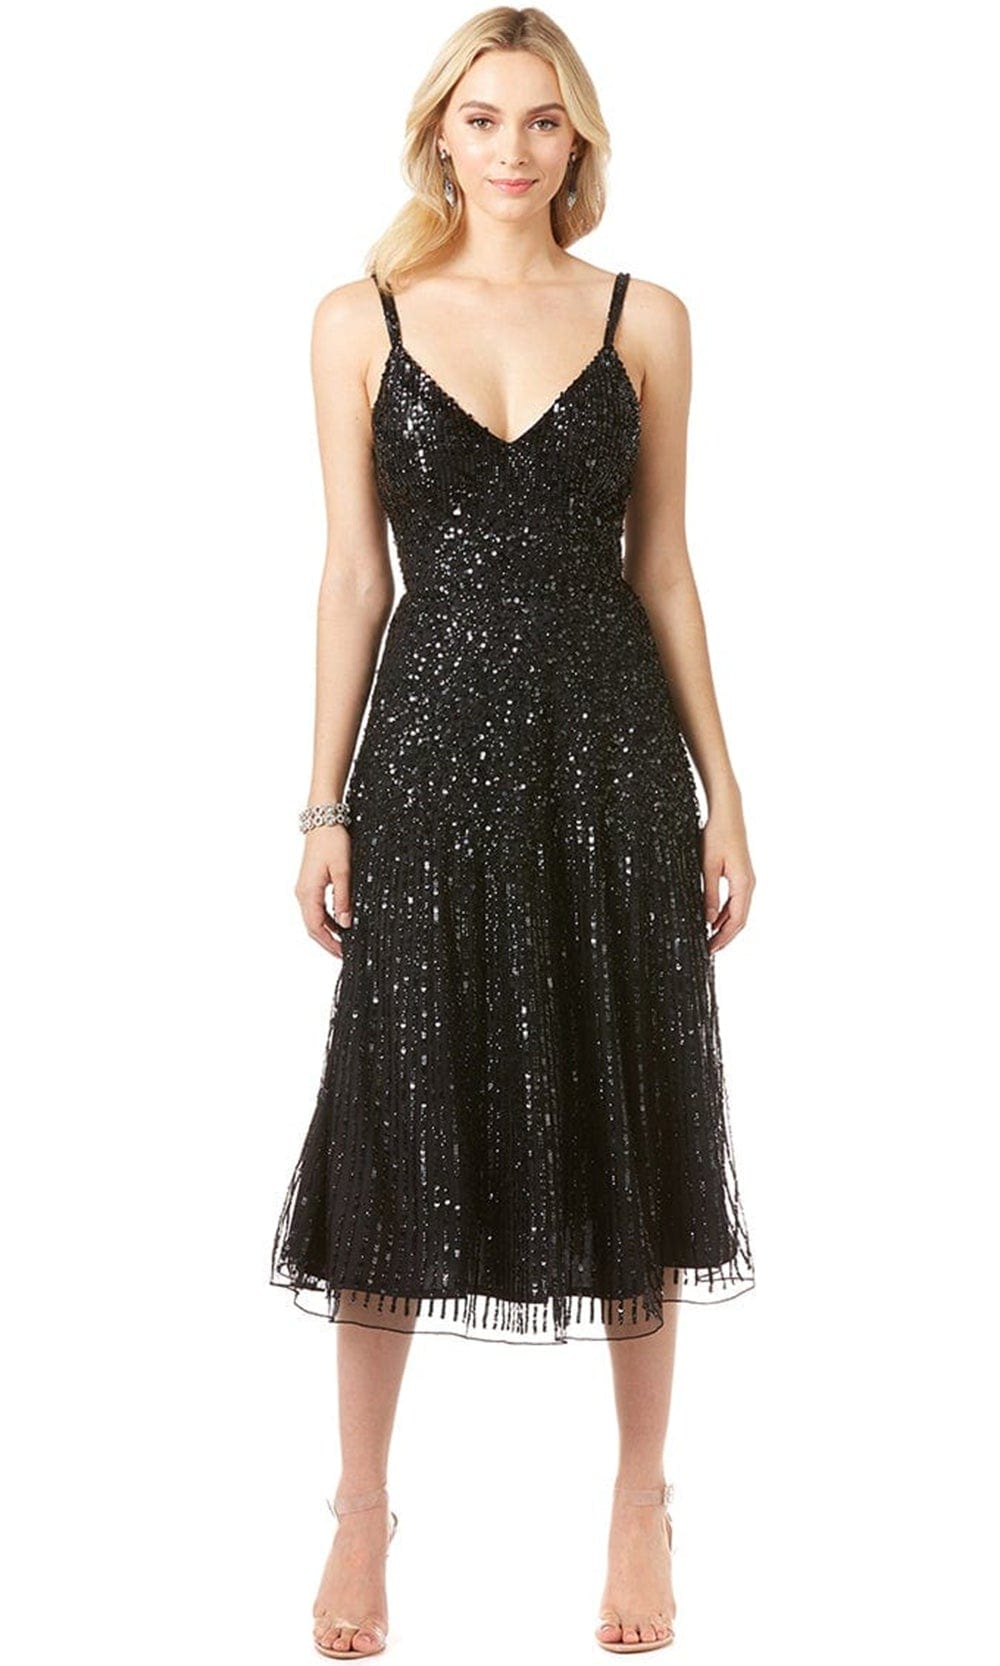 Image of Lara Dresses 29347 - Glittery Sequined Sleeveless Tea Length Dress